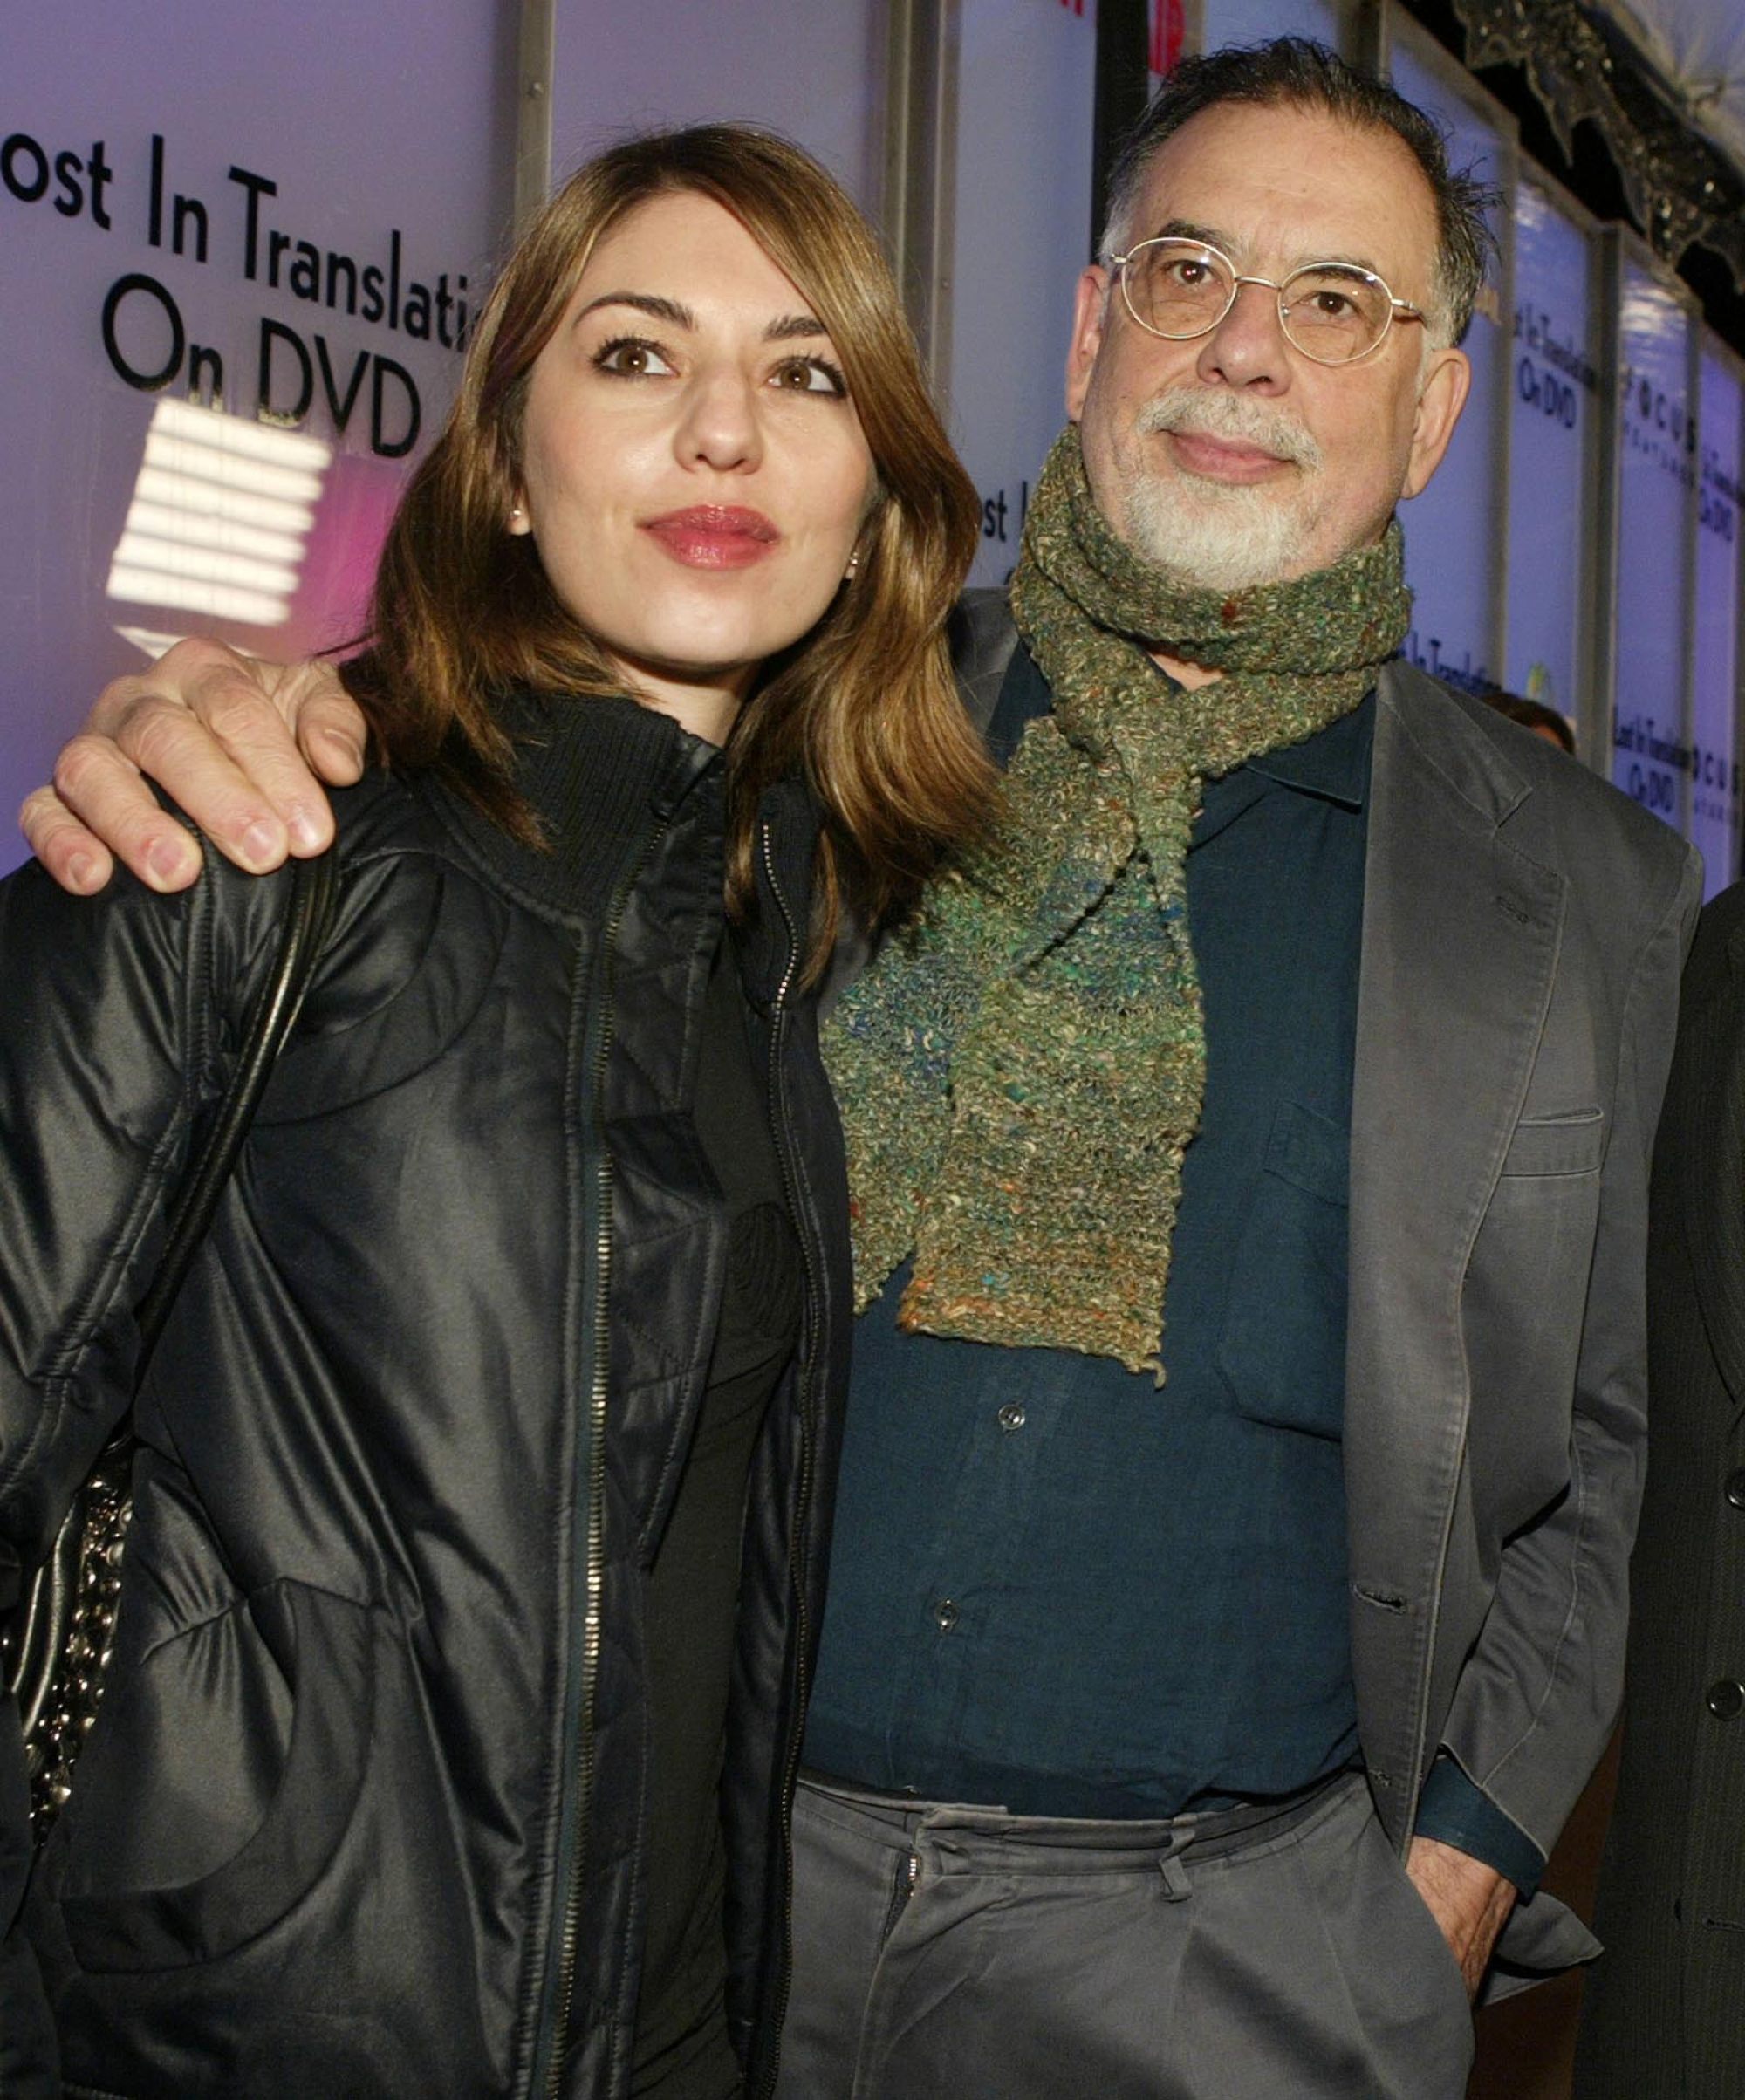 Sofia Coppola directs new campaign film, The Chanel Iconic